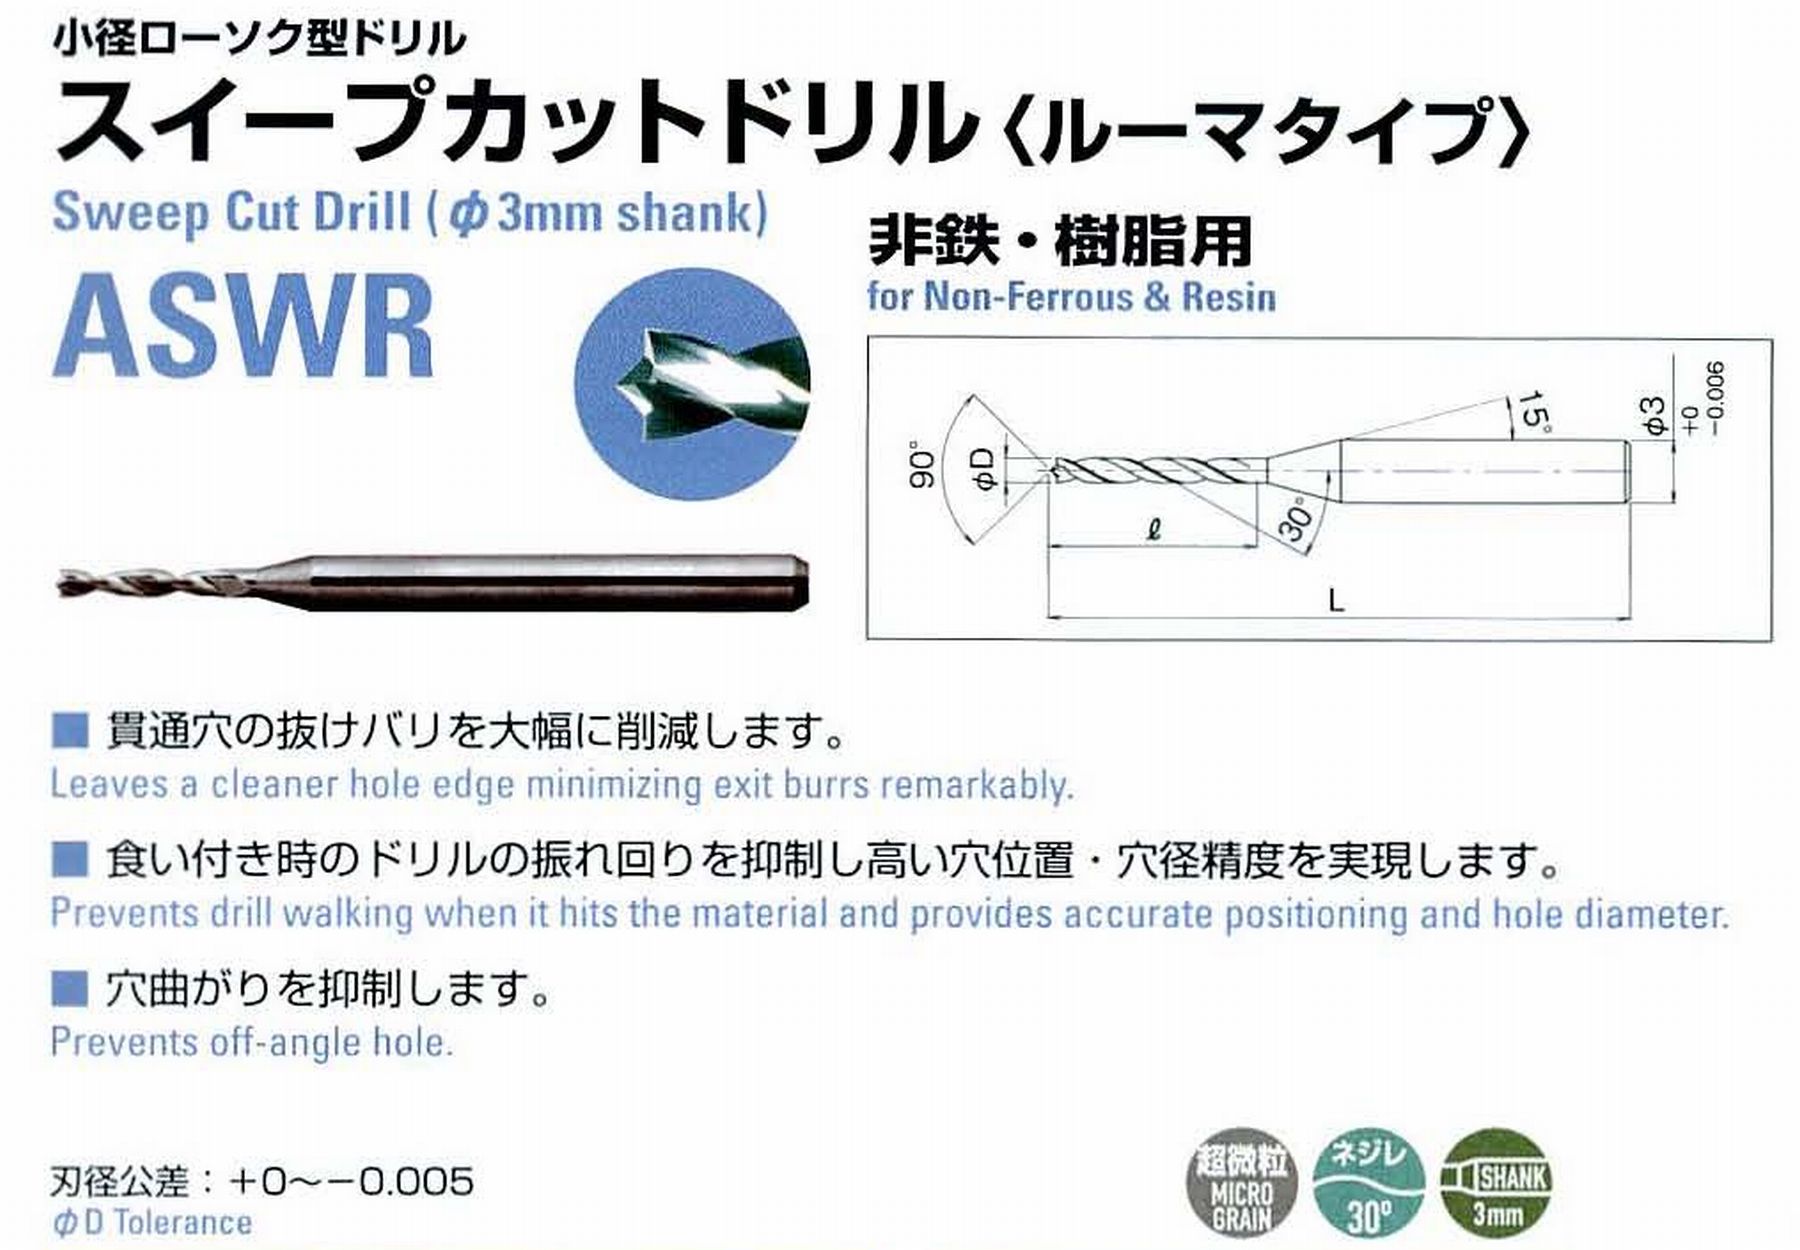 ATOM アトム サイトウ製作所 小径ローソク型ドリル スイープカットドリル(ルーマタイプ) ASWR-0035 径0.35 刃長5 全長38 シャンク3mm